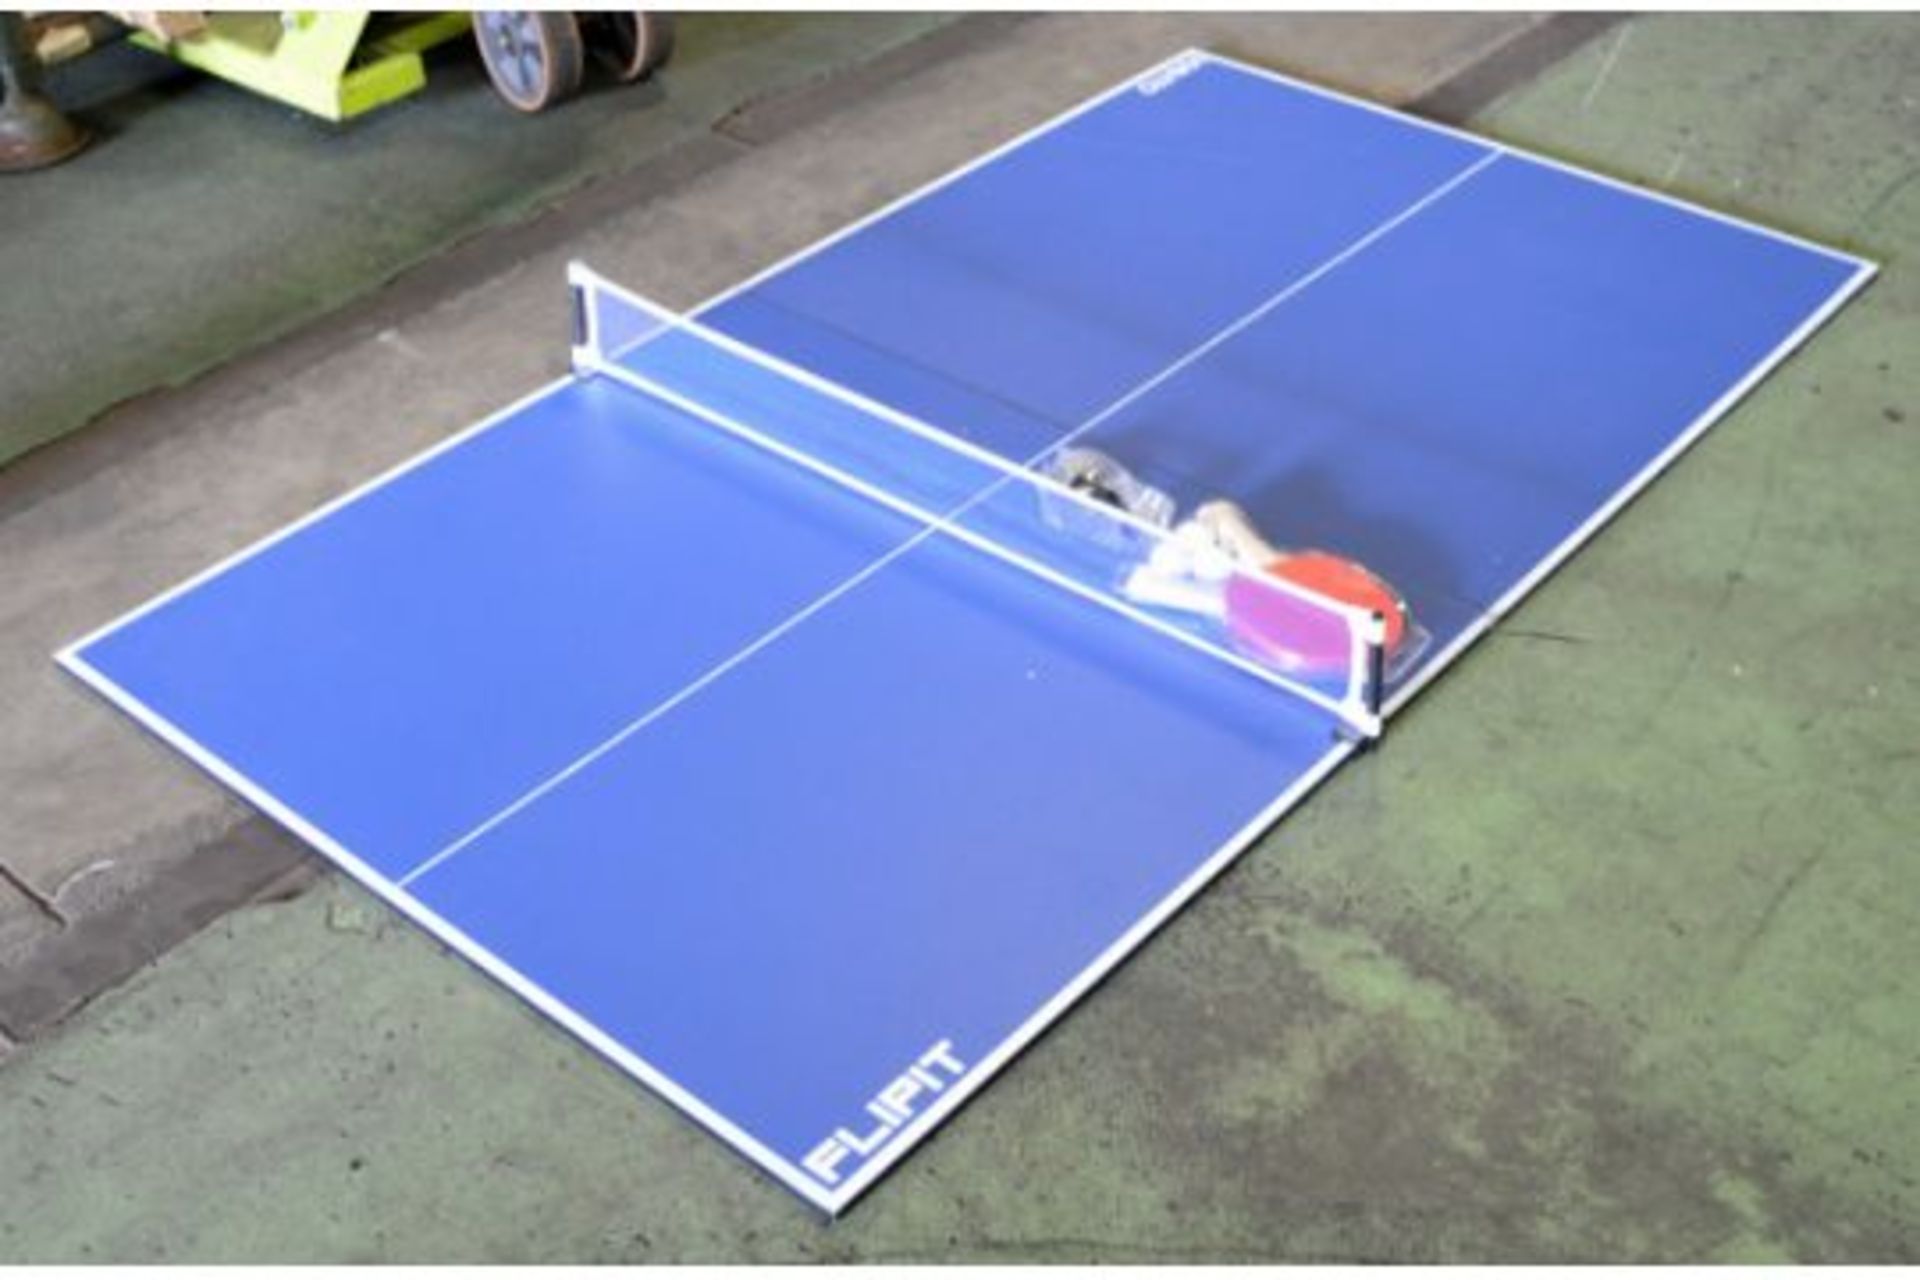 Viavito Flipit table tennis top - Image 2 of 6